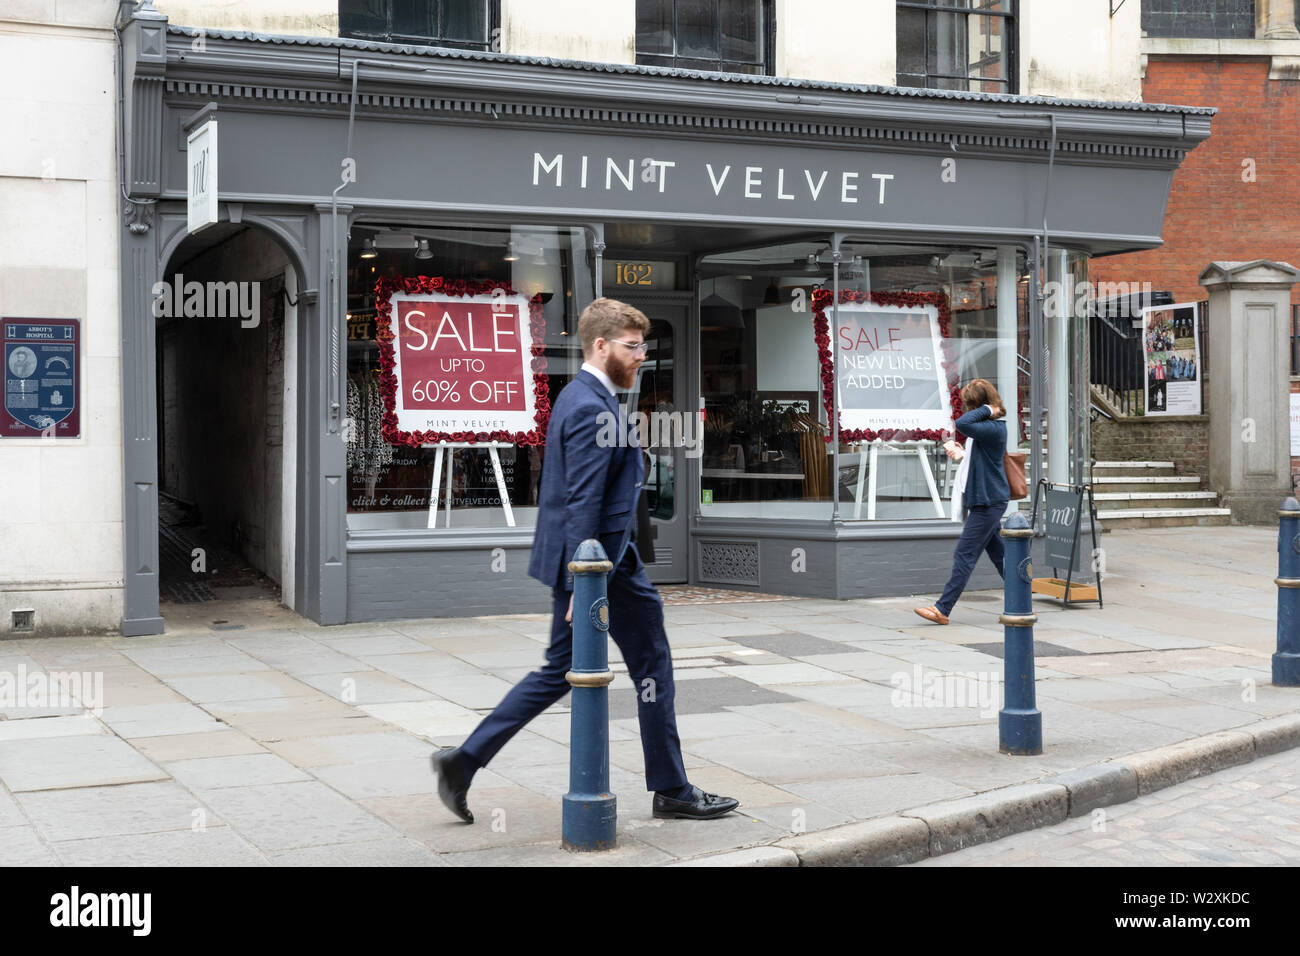 Mint Velvet shop front, high street retailer of womenswear, UK Stock Photo